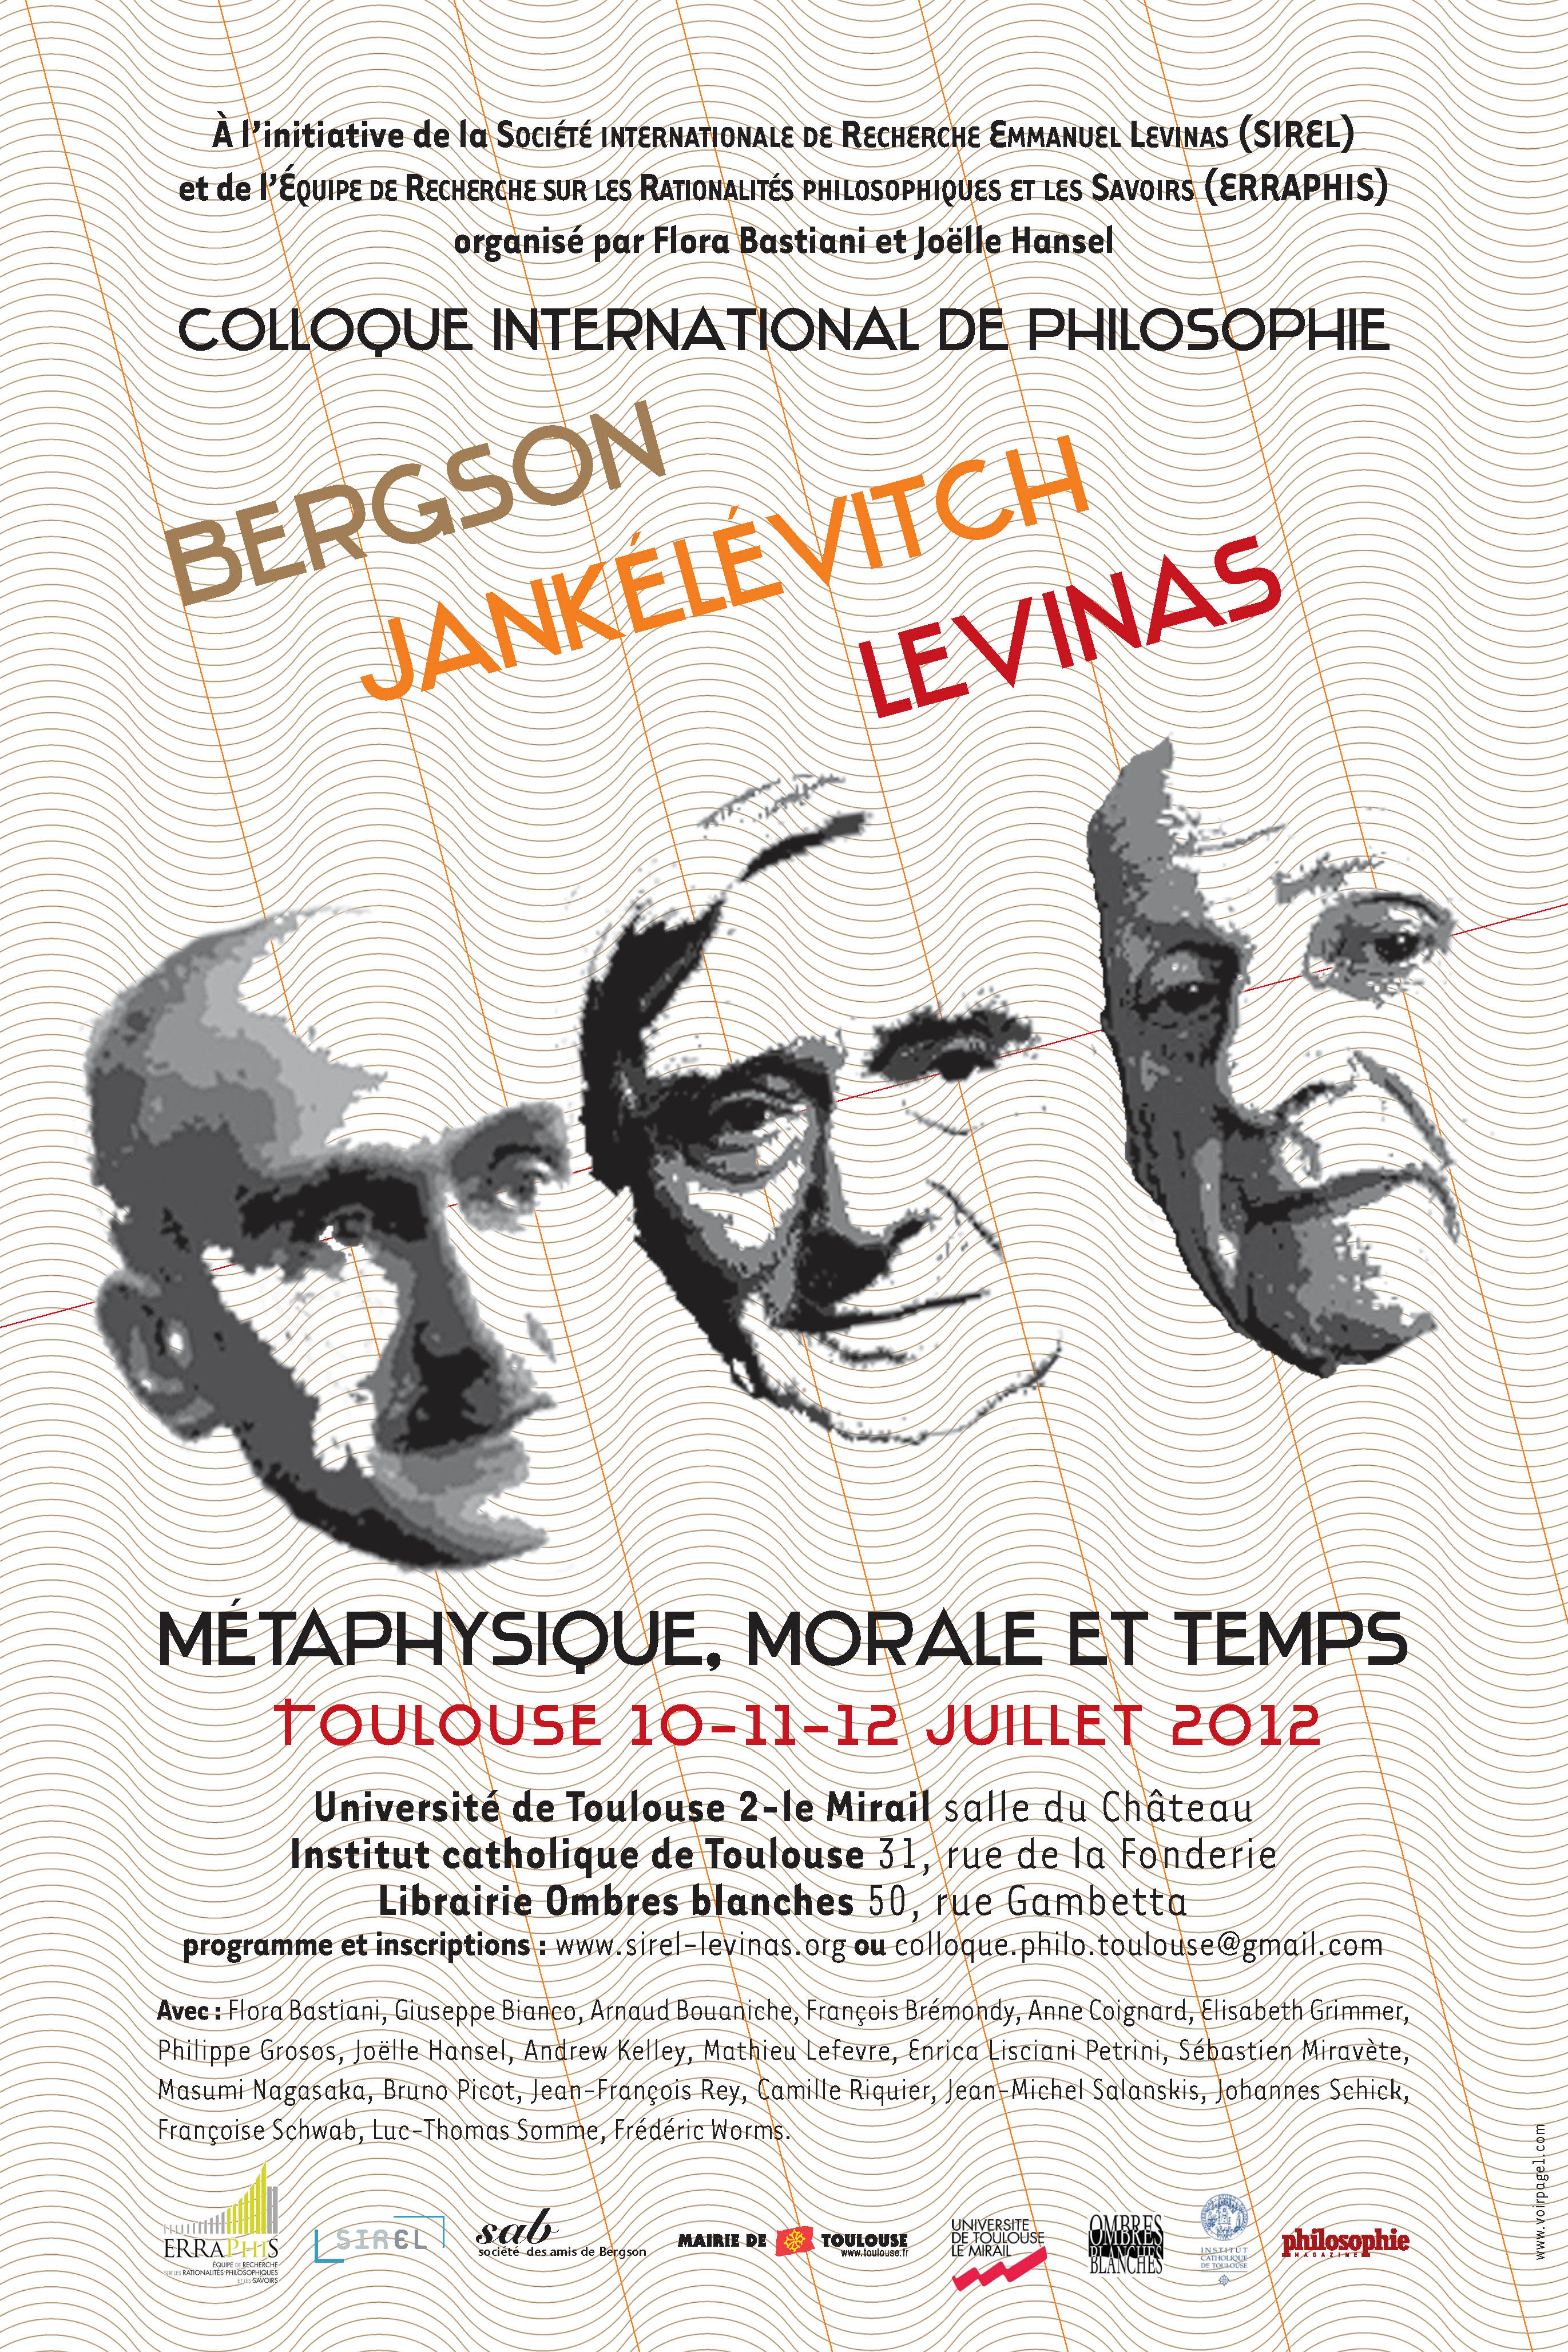 Bergson, Jankélévitch, Levinas